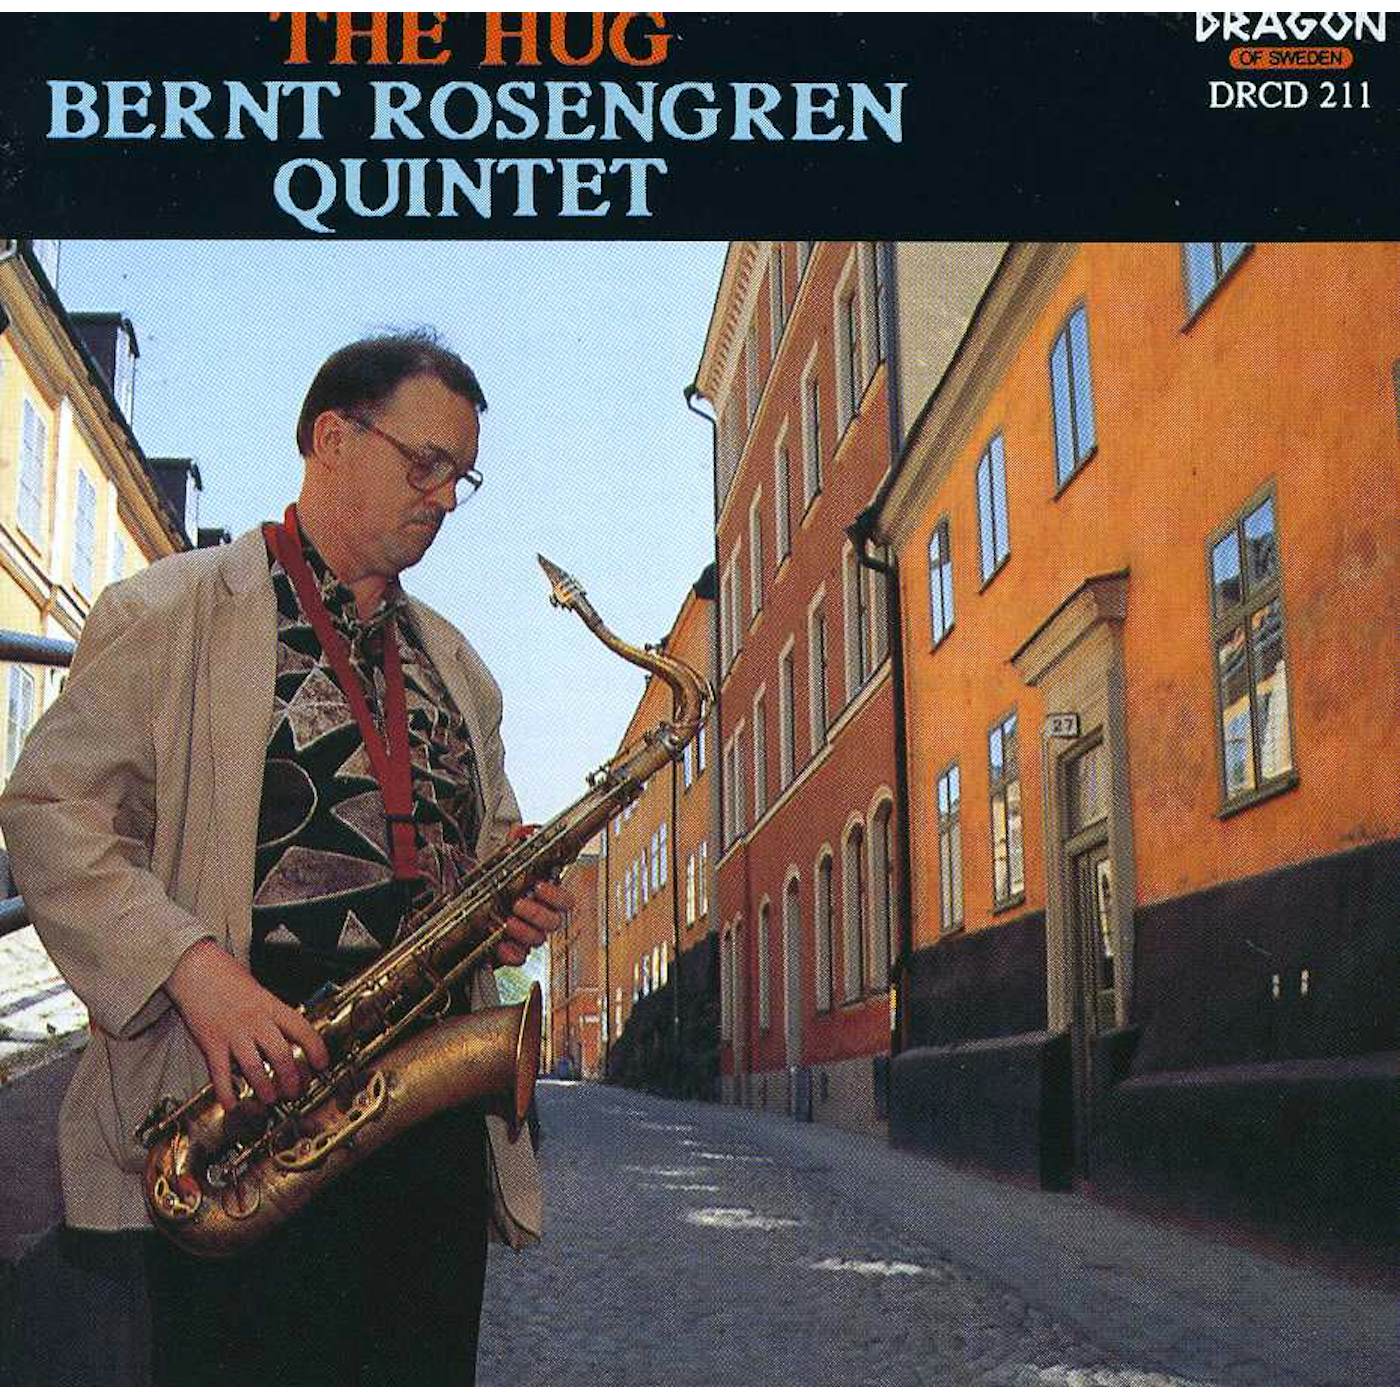 Bernt Rosengren HUG CD